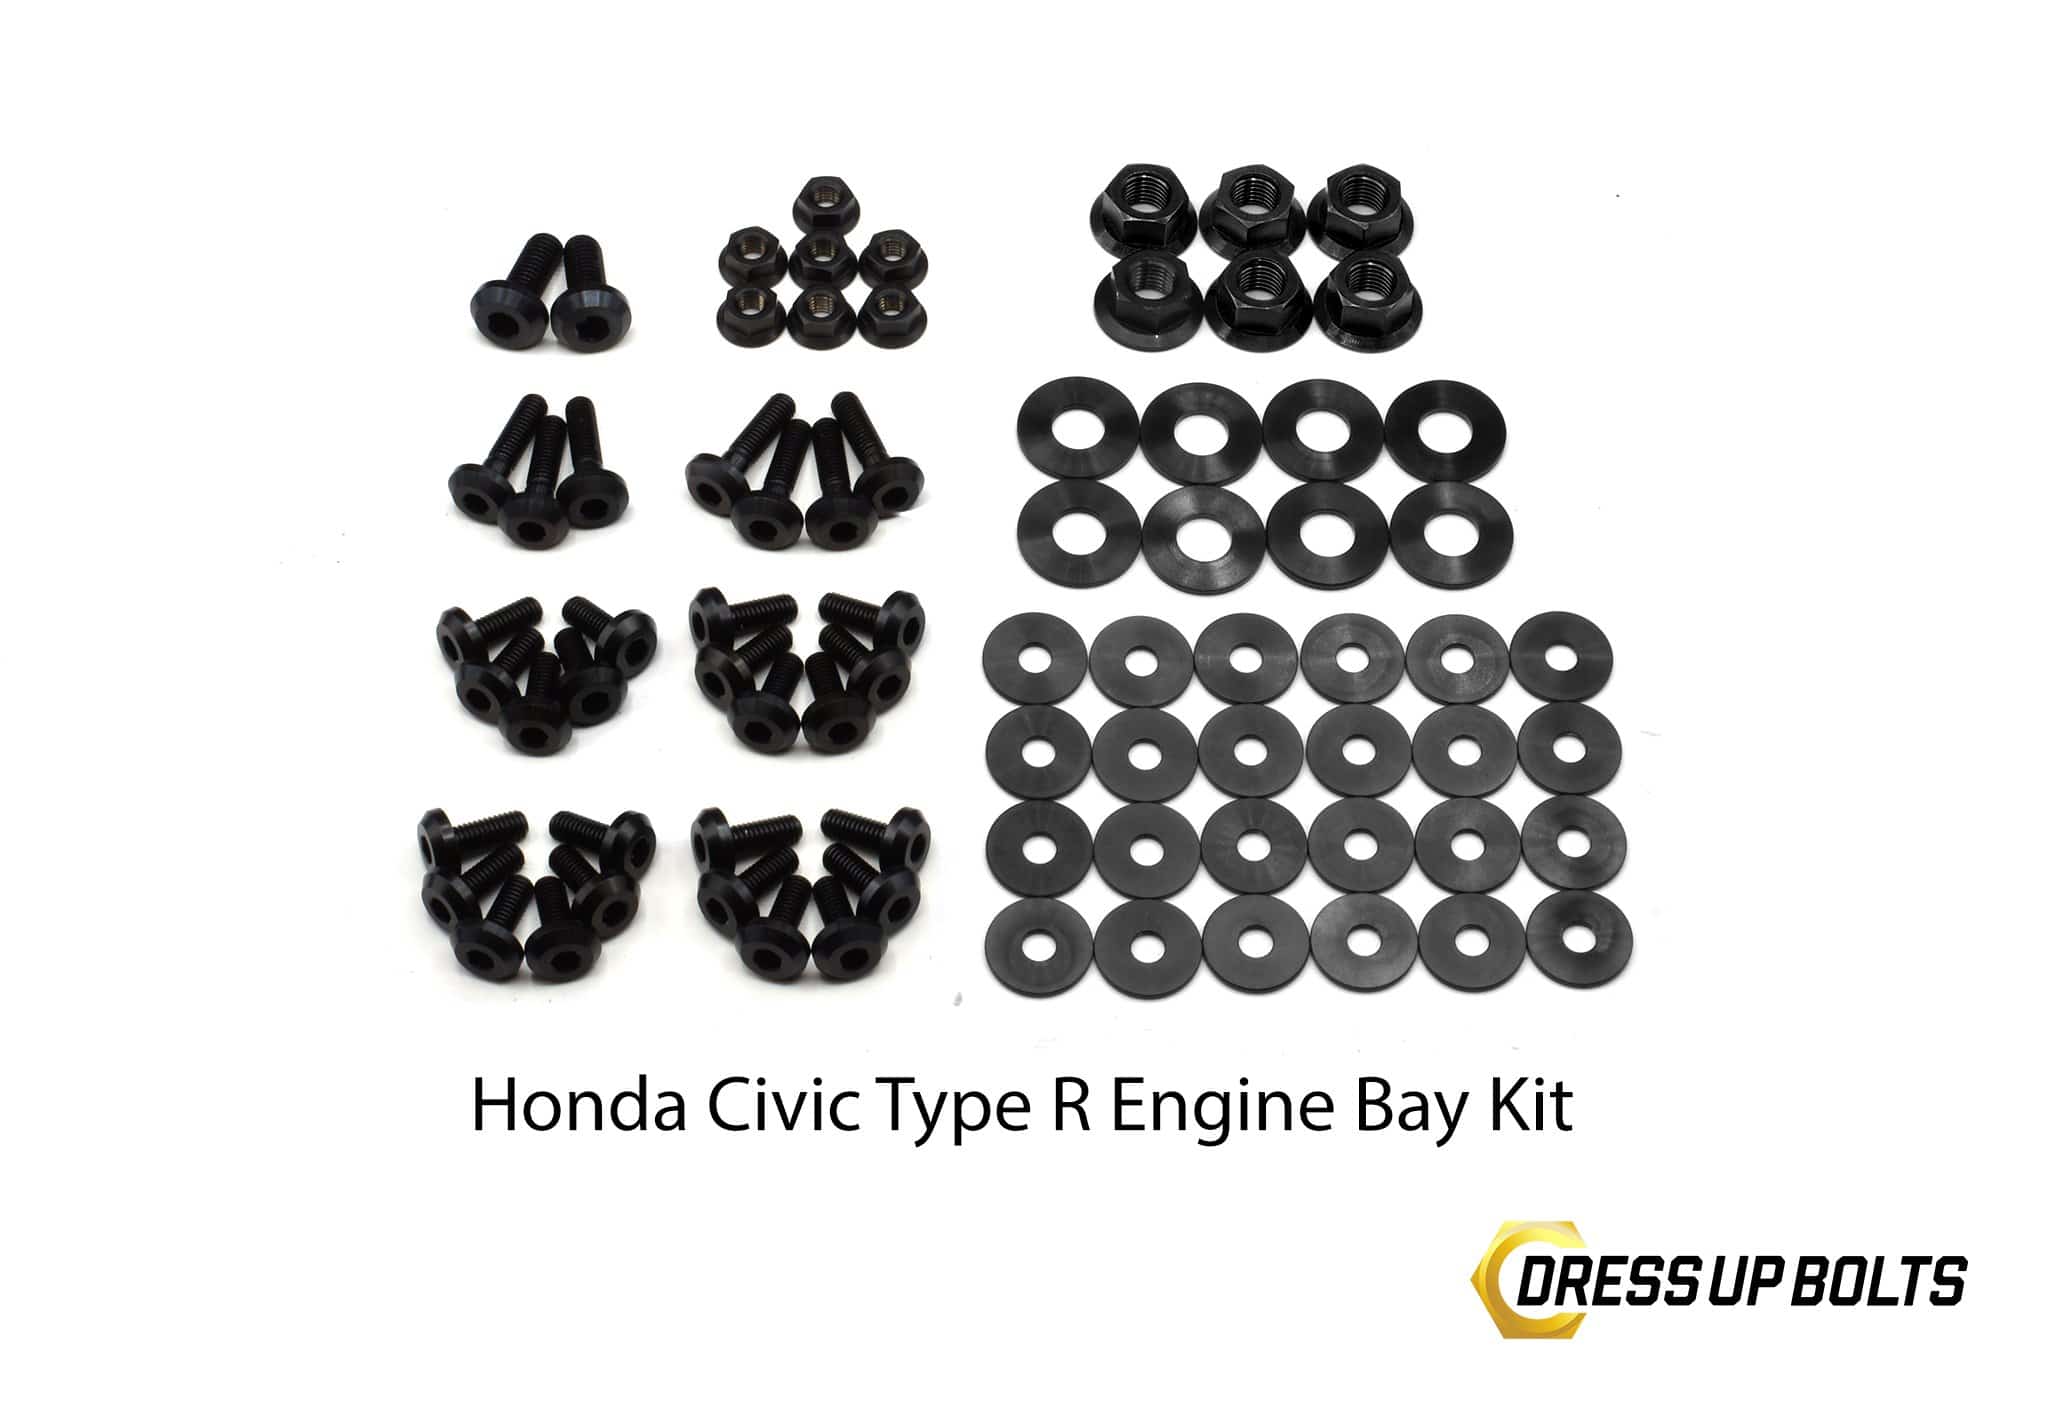 Honda Civic Type R (FK8) Engine Accessories Hardware Kit.